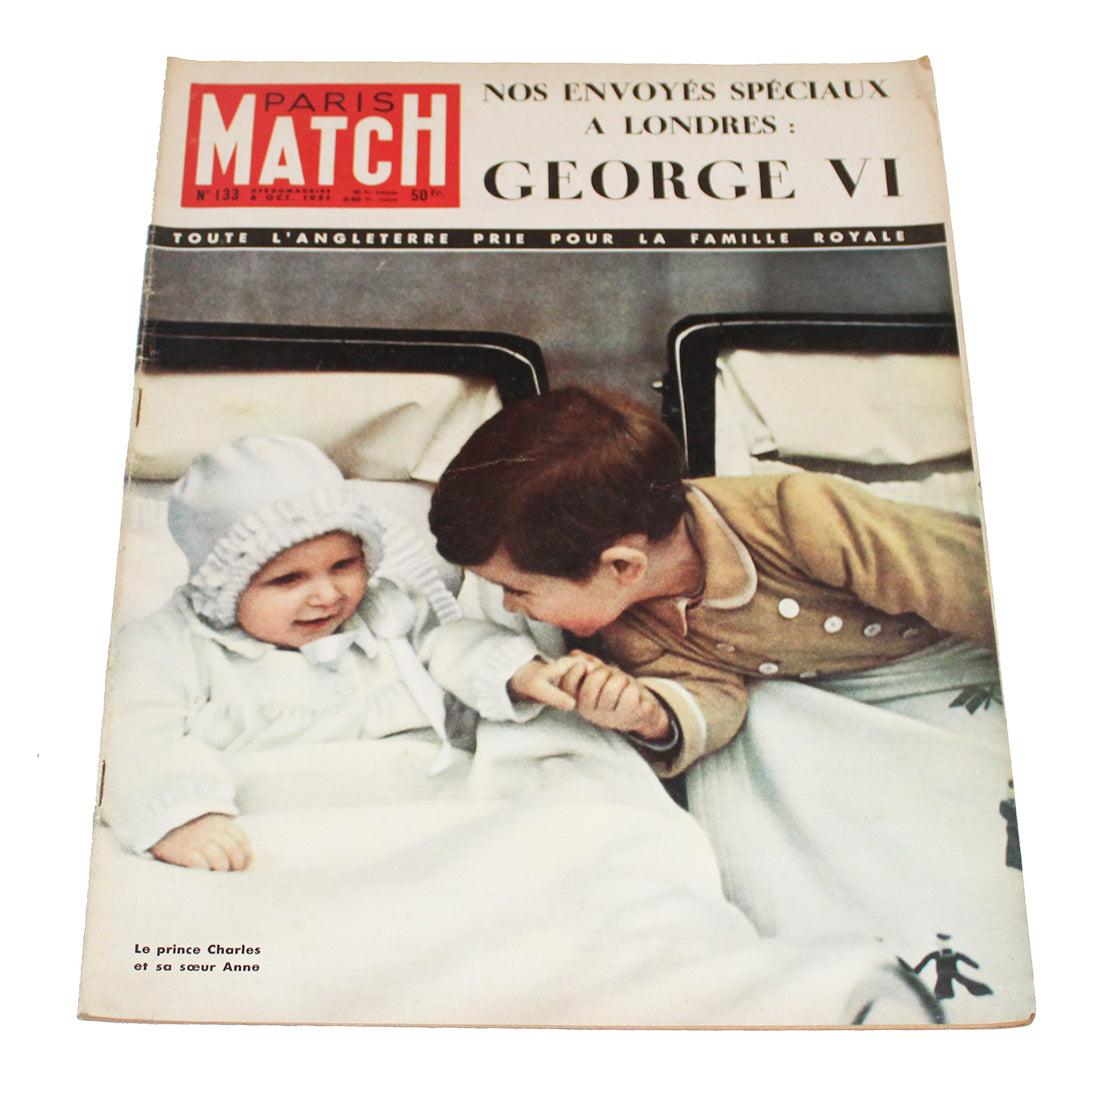 Magazine / revue Paris Match n° 133 du 6/10/1951 Georges VI Prince Charles